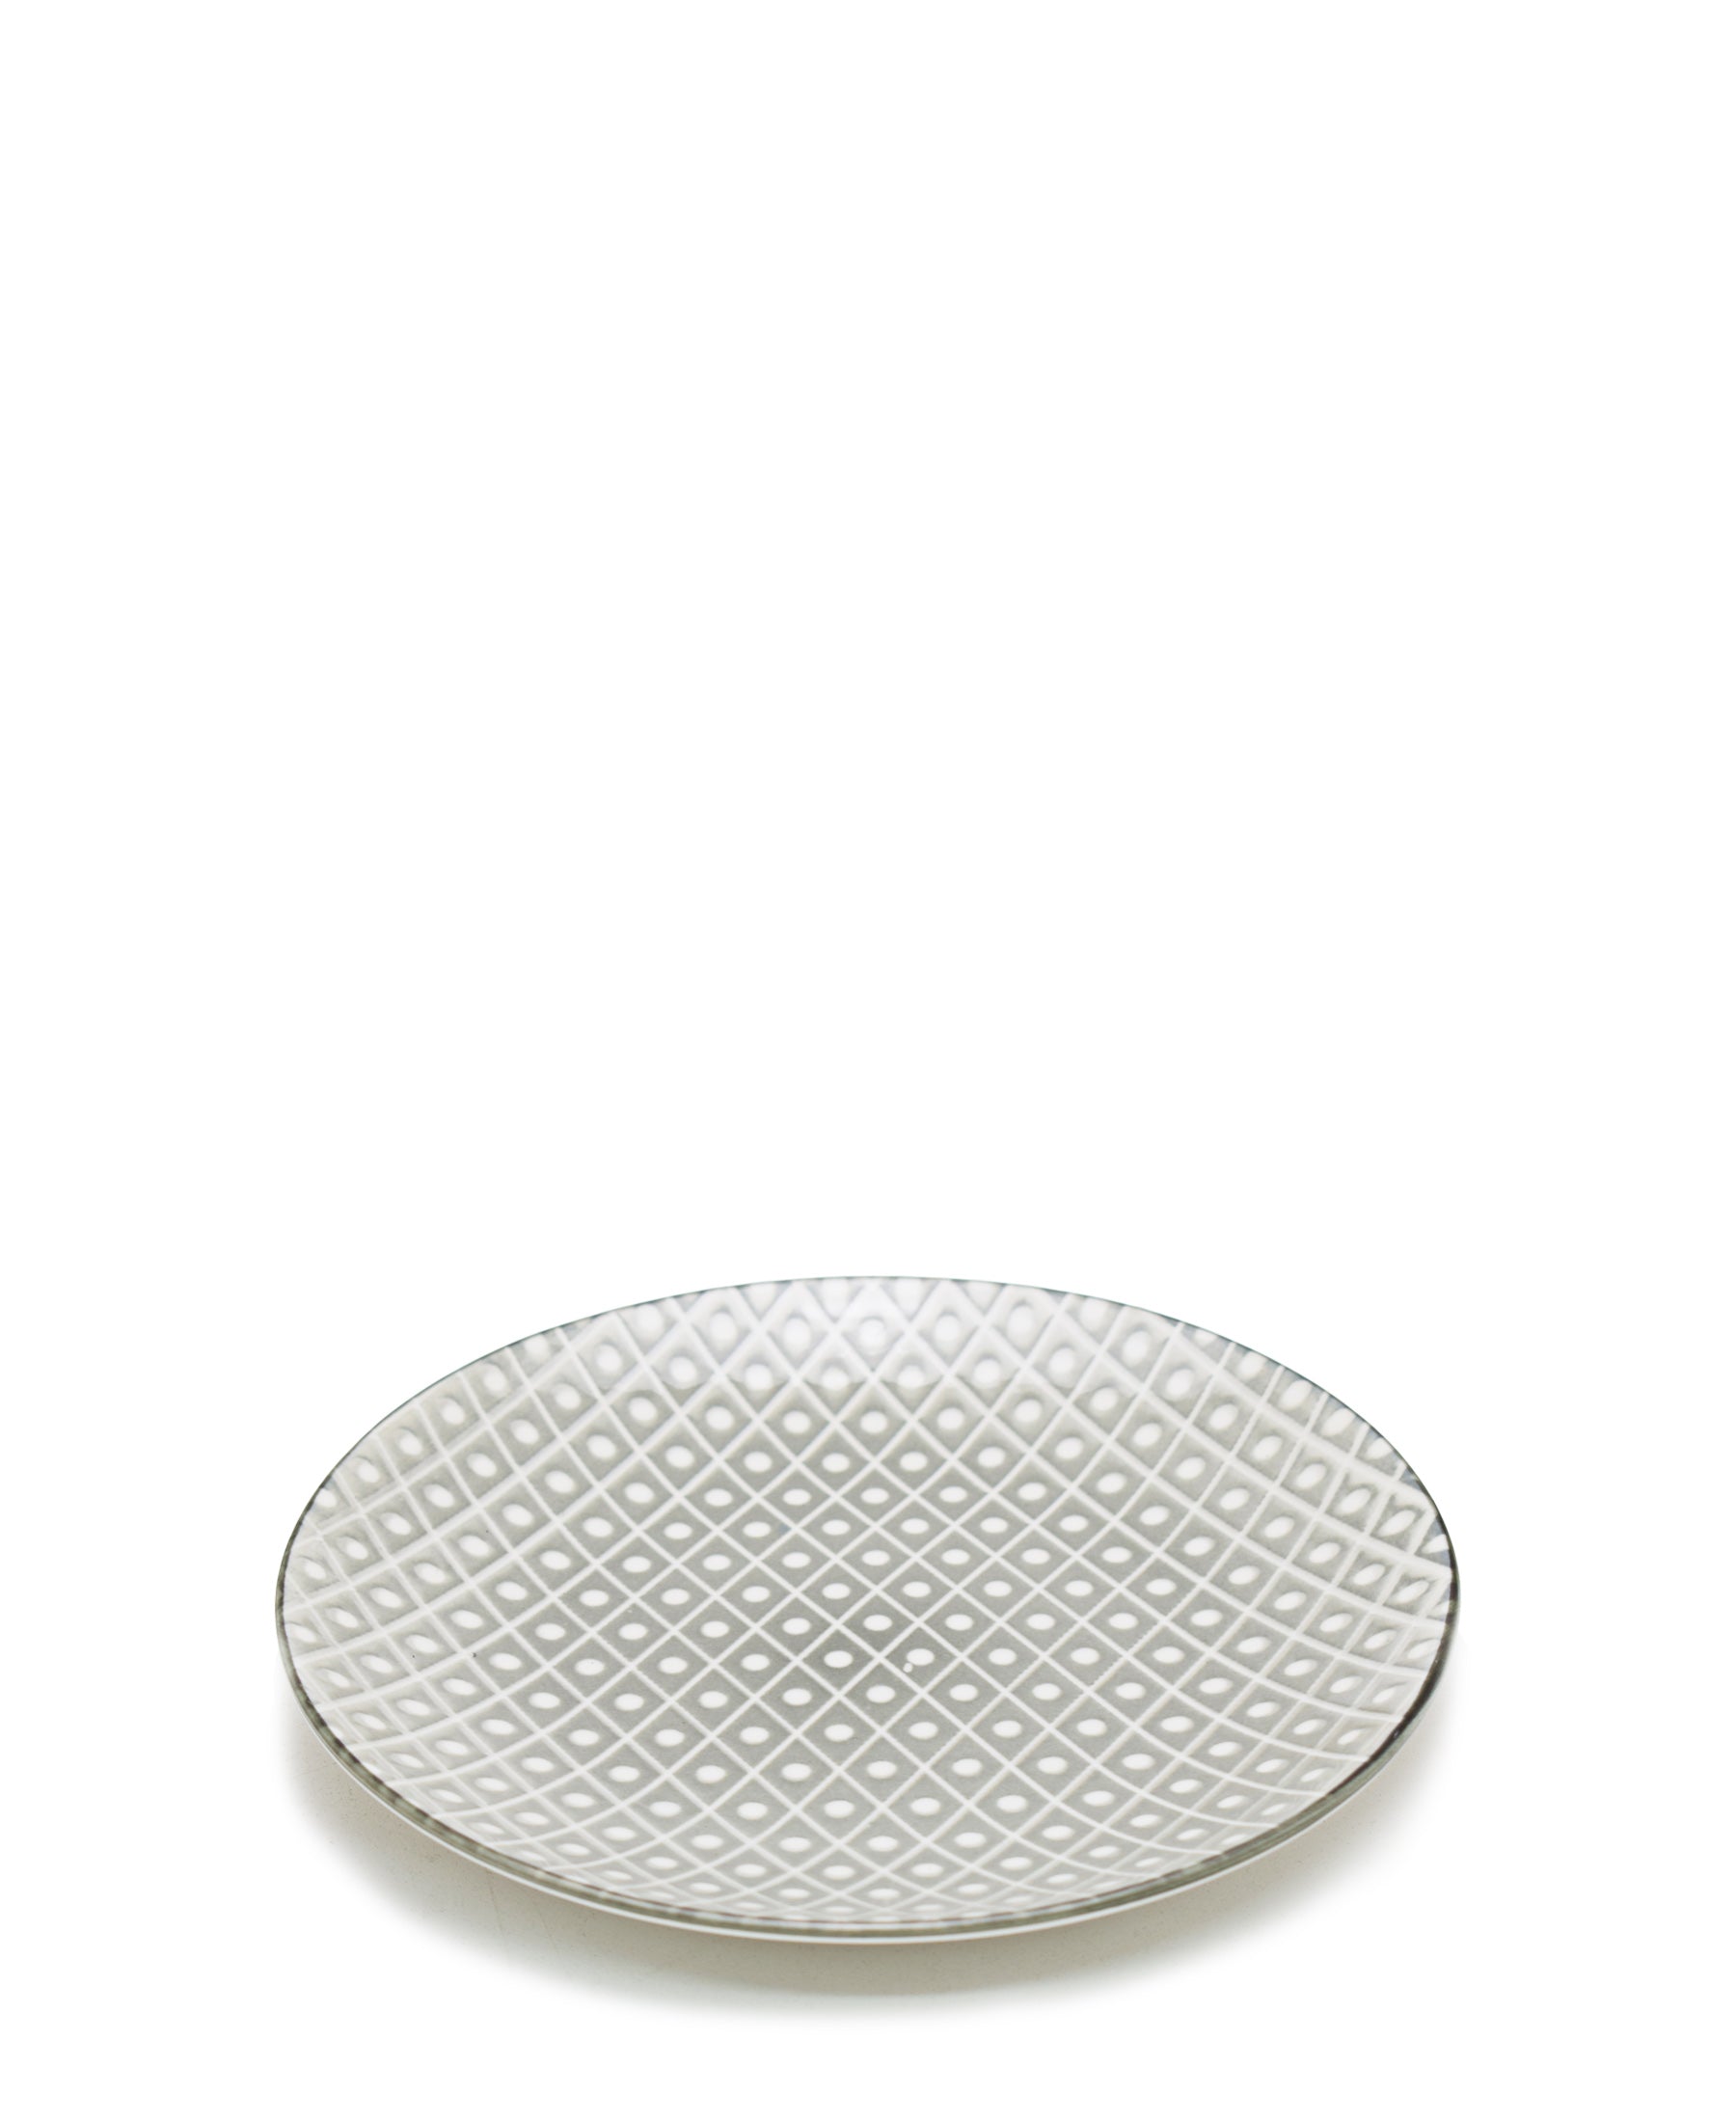 Shanghai Side Plate 7.5cm - Grey